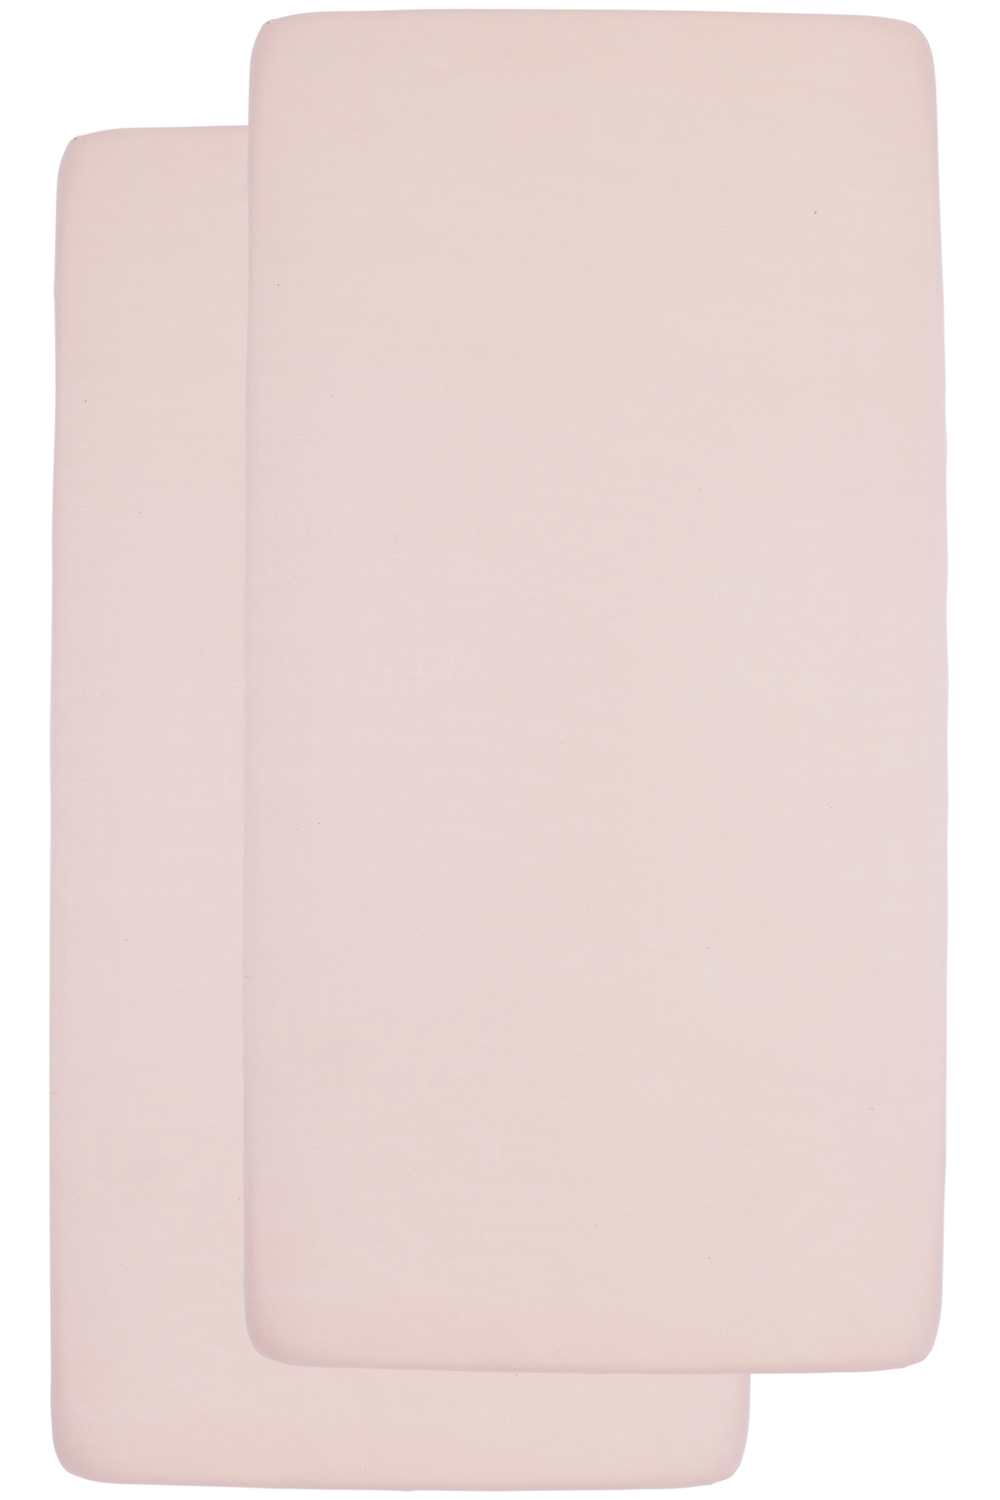 Jersey Hoeslaken Juniorbed 2-pack - Soft Pink - 70x140/150cm